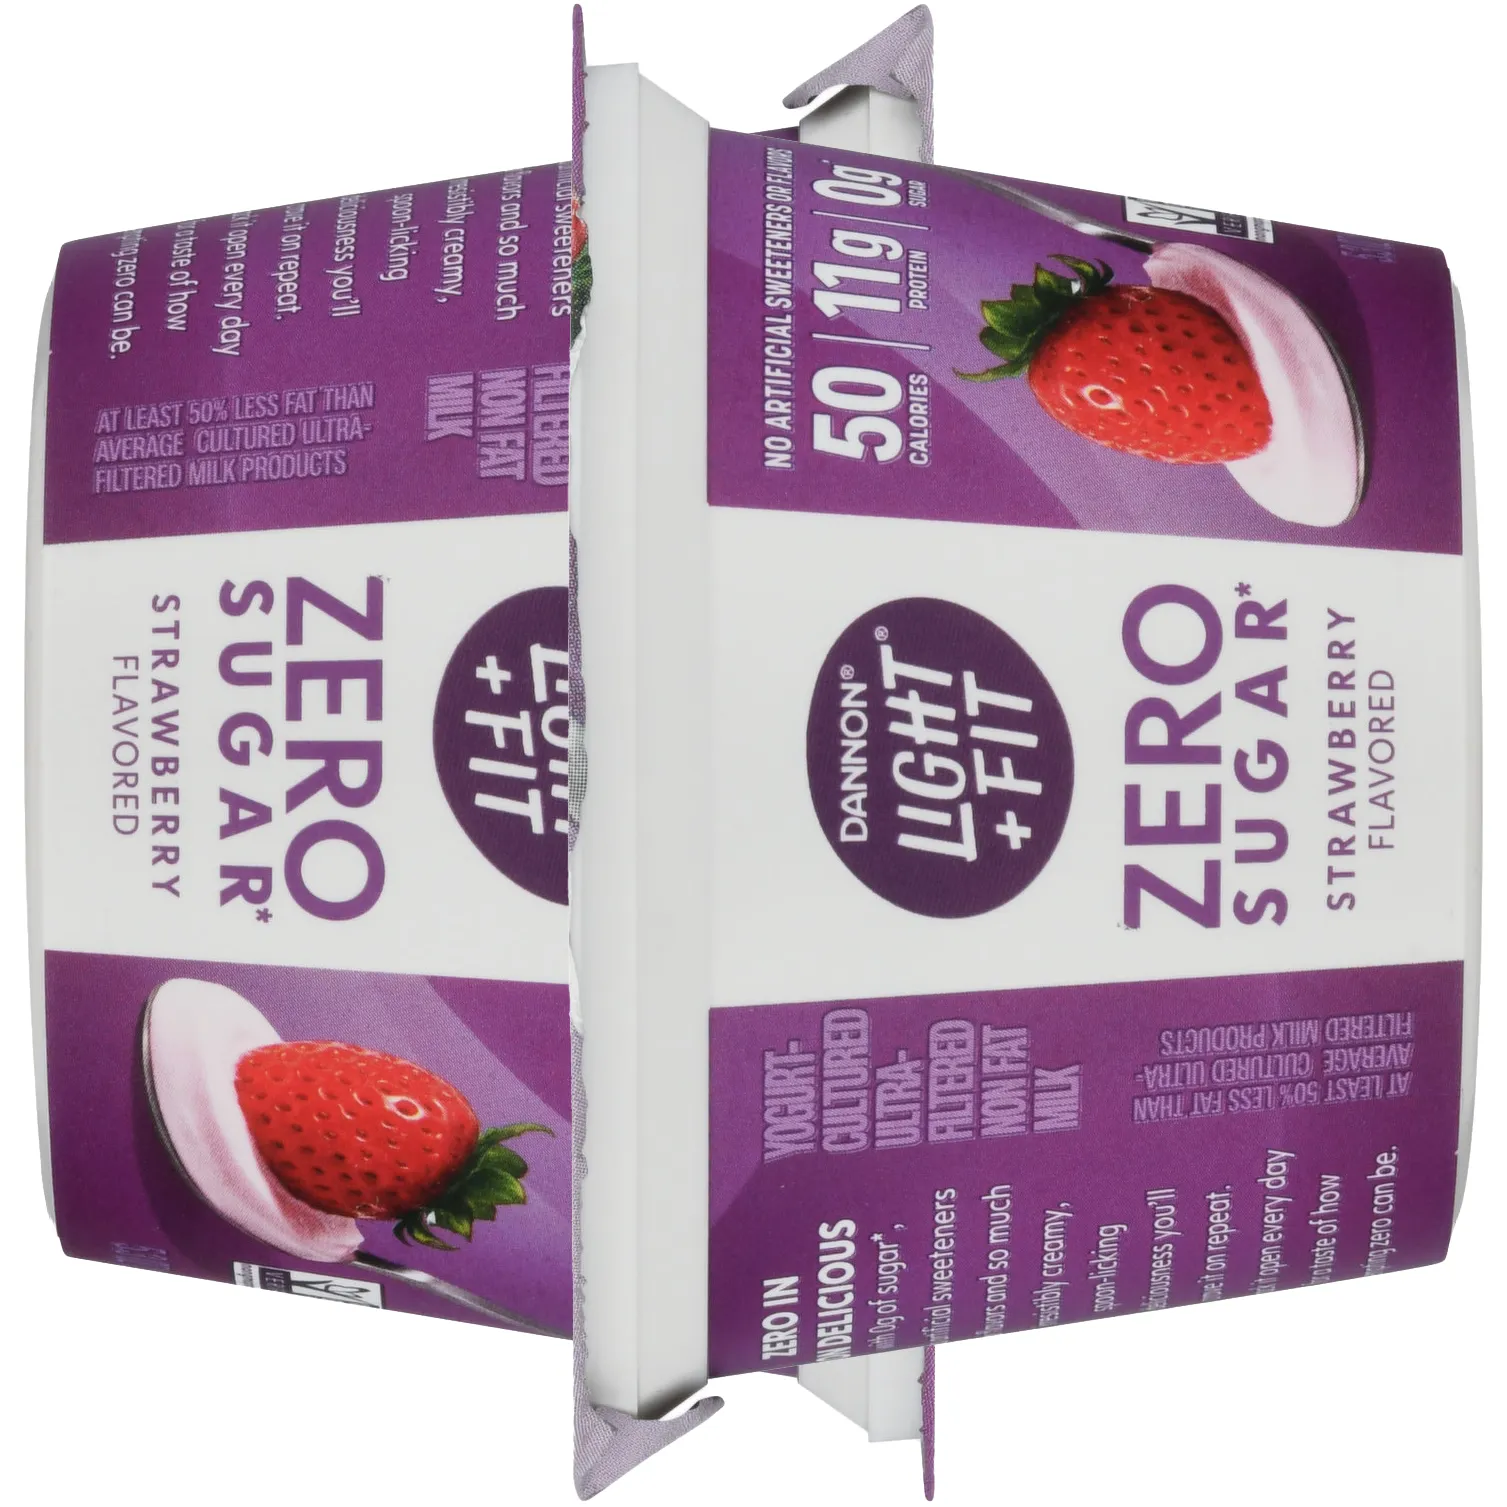 Free Light & Fit Zero Sugar Single Serve Yogurt At Publix